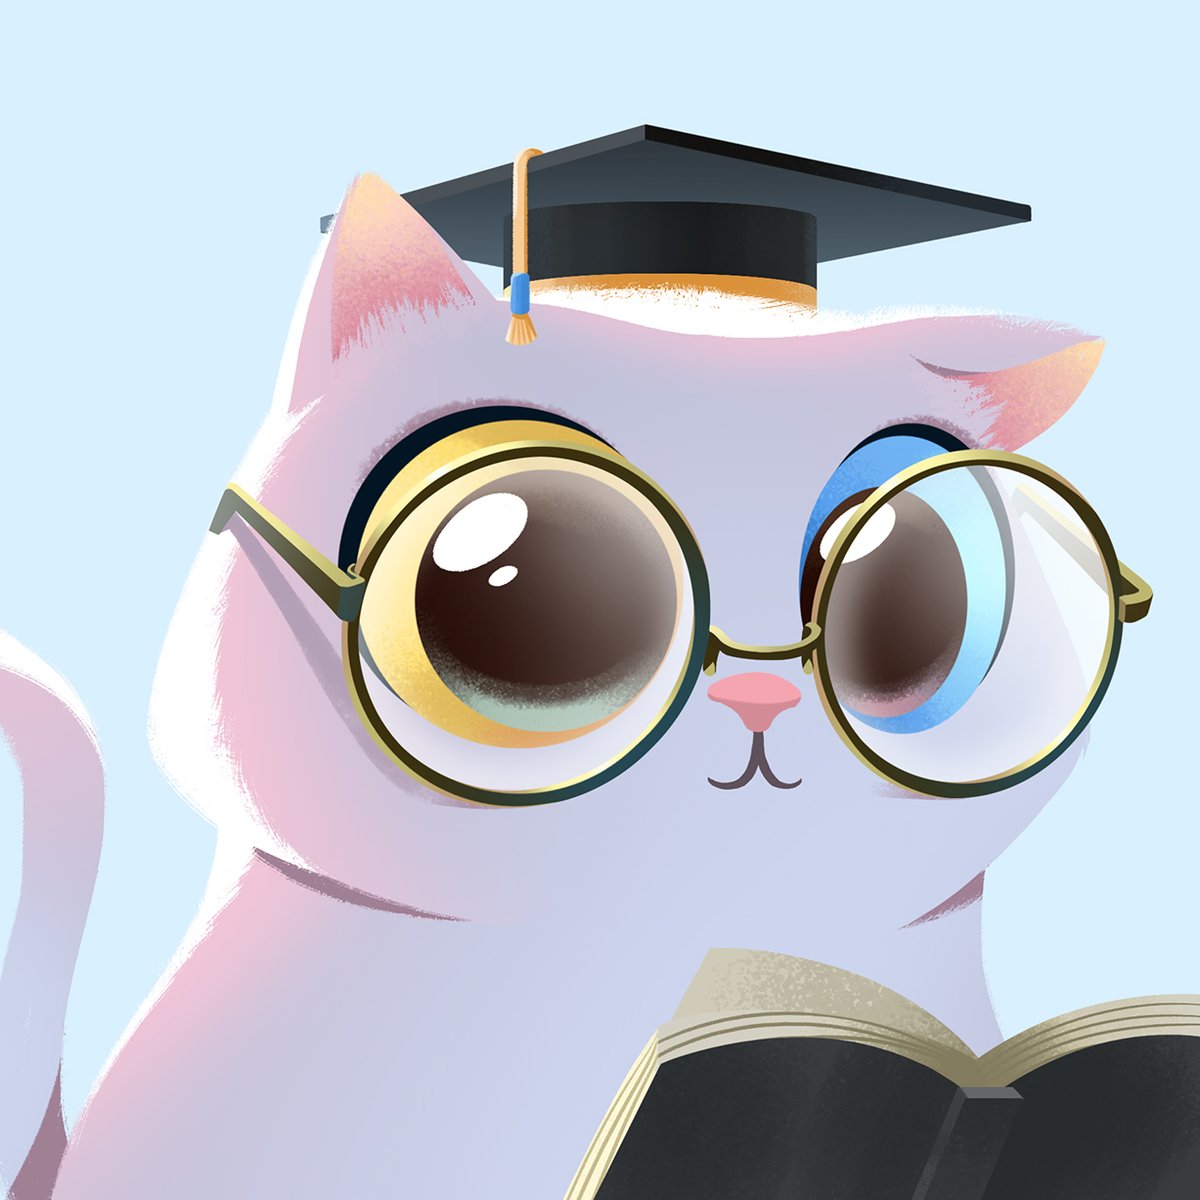 A cute white kitten, 
it looks even smarter with glasses on, 
don't you think? 😁
#catportrait
#cat 
#cute
#cuteadorable
#digital
#digitalpainting 
#feline
#furry 
#illustration
#kitten
#kitty
#pet 
#portrait 
#sweet
#puss